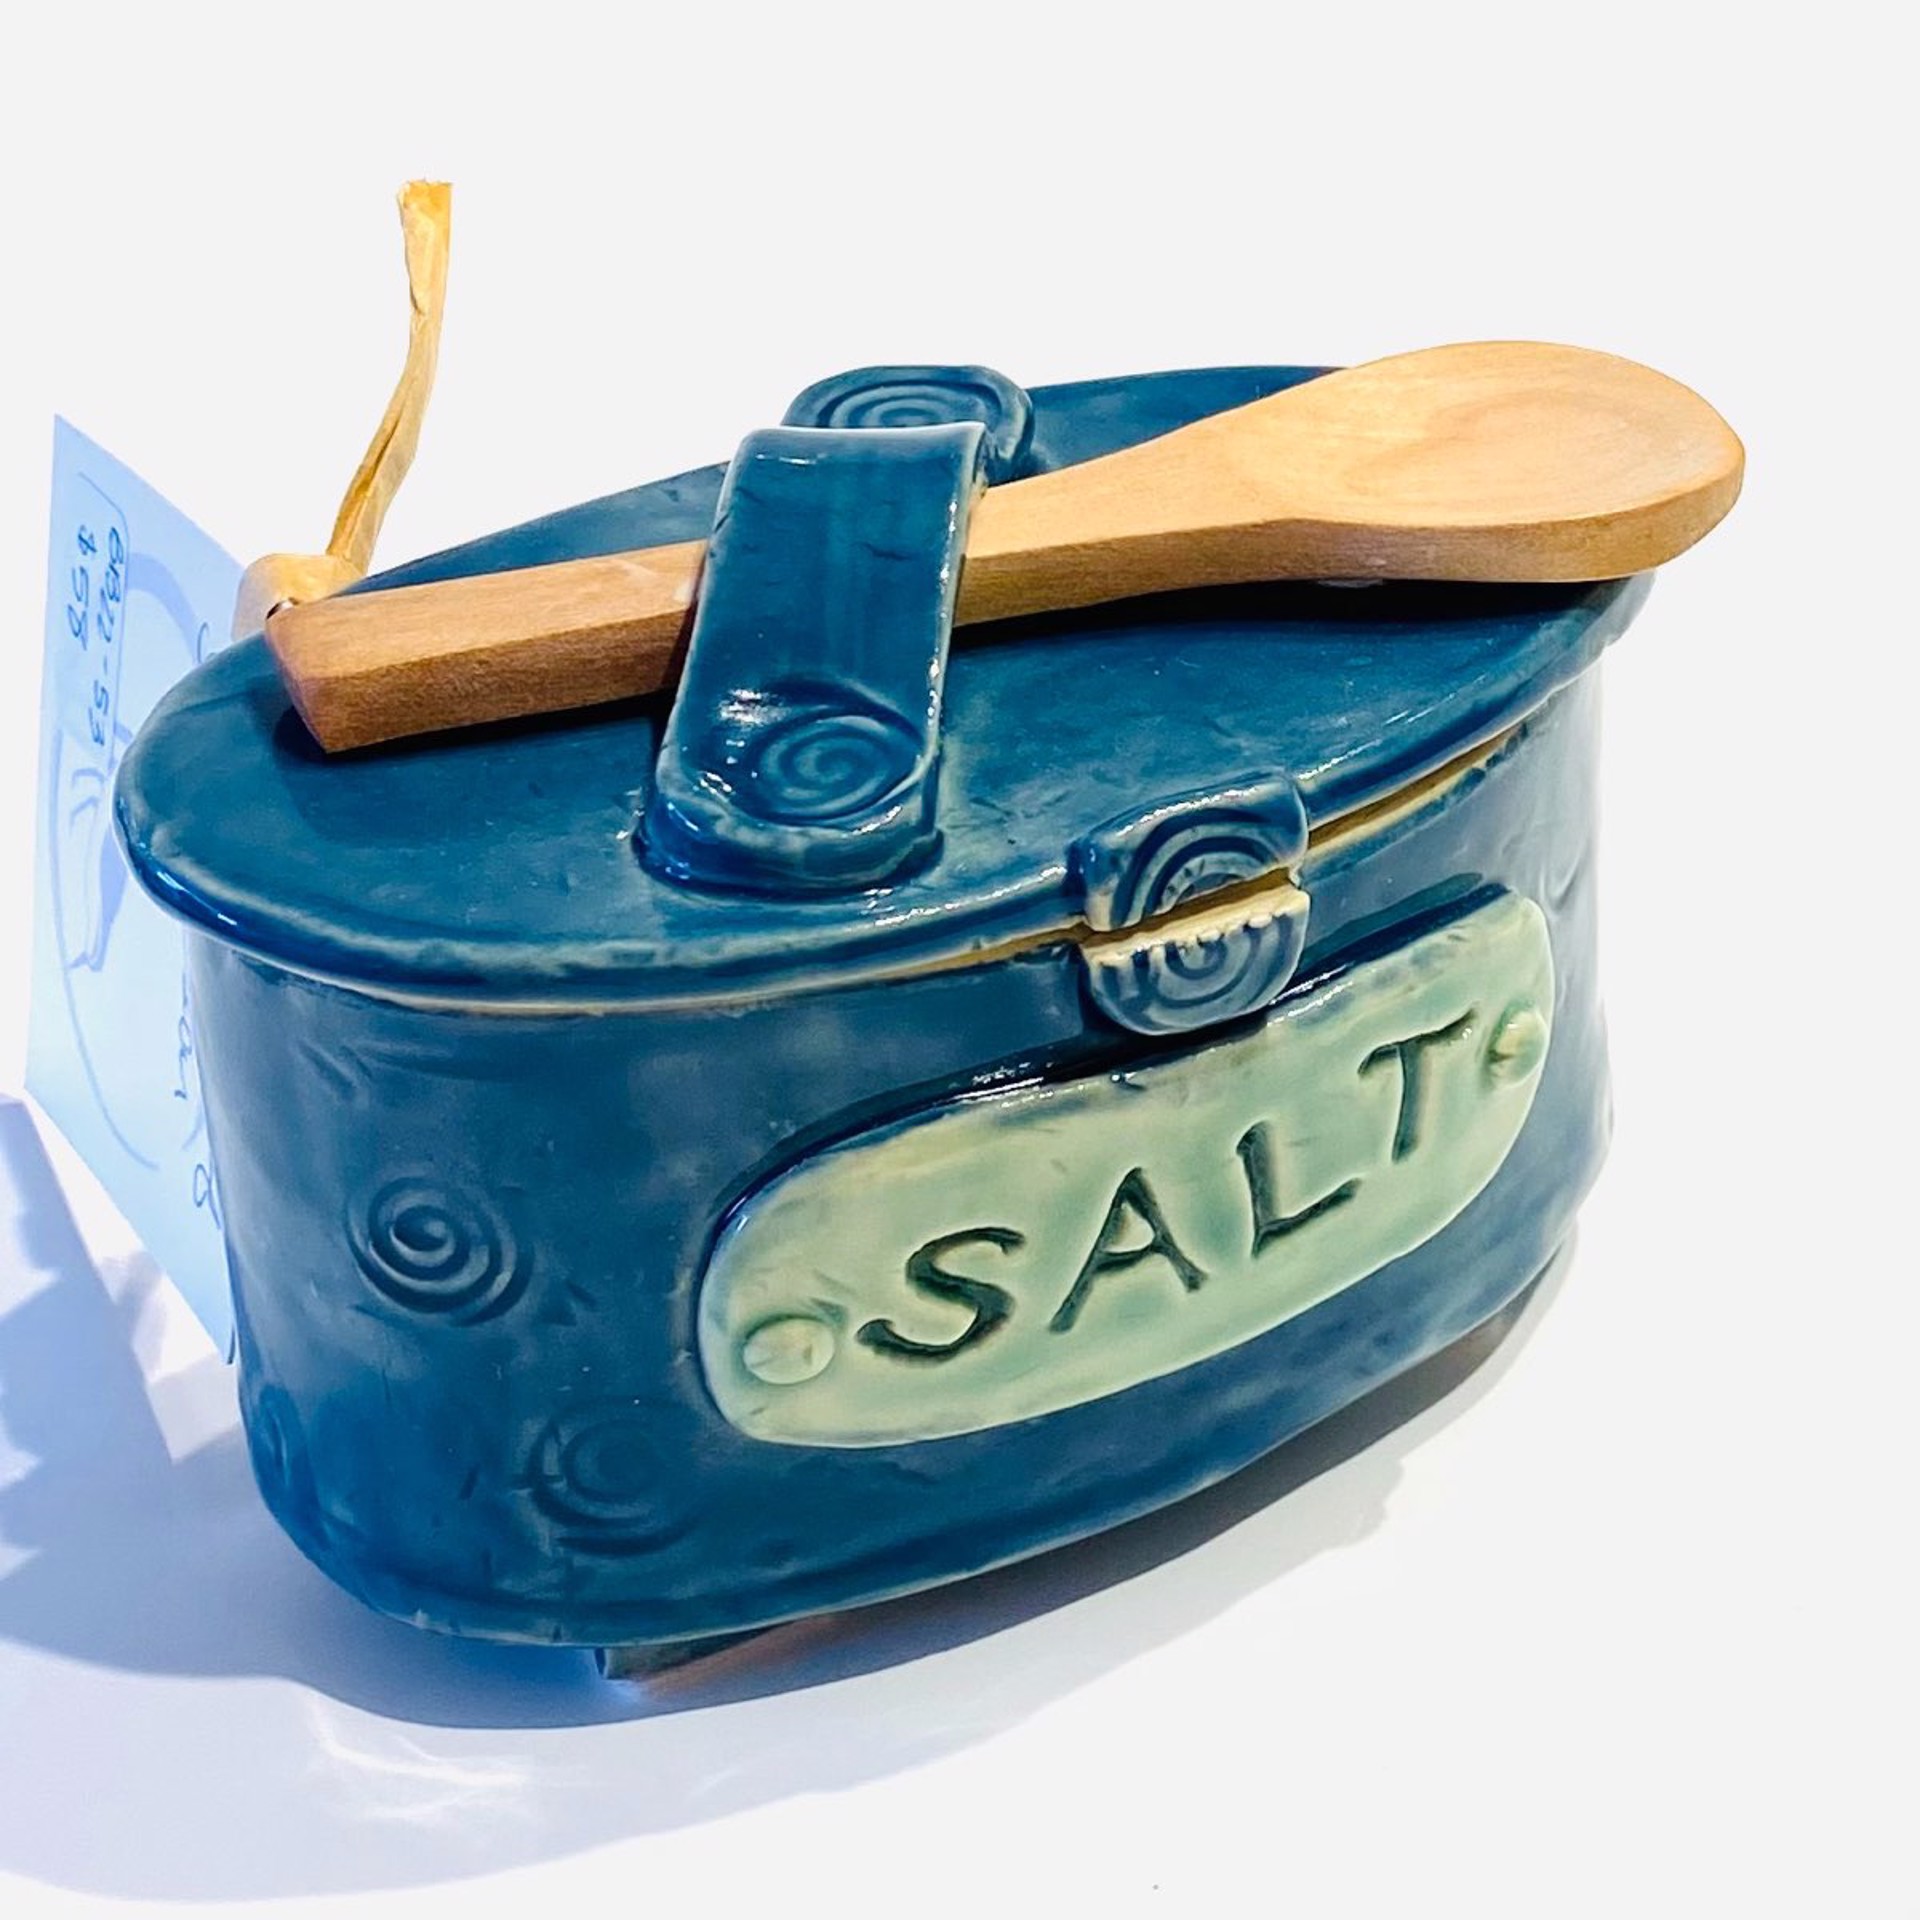 Salt Cellar by Barbara Bergwerf, Ceramics